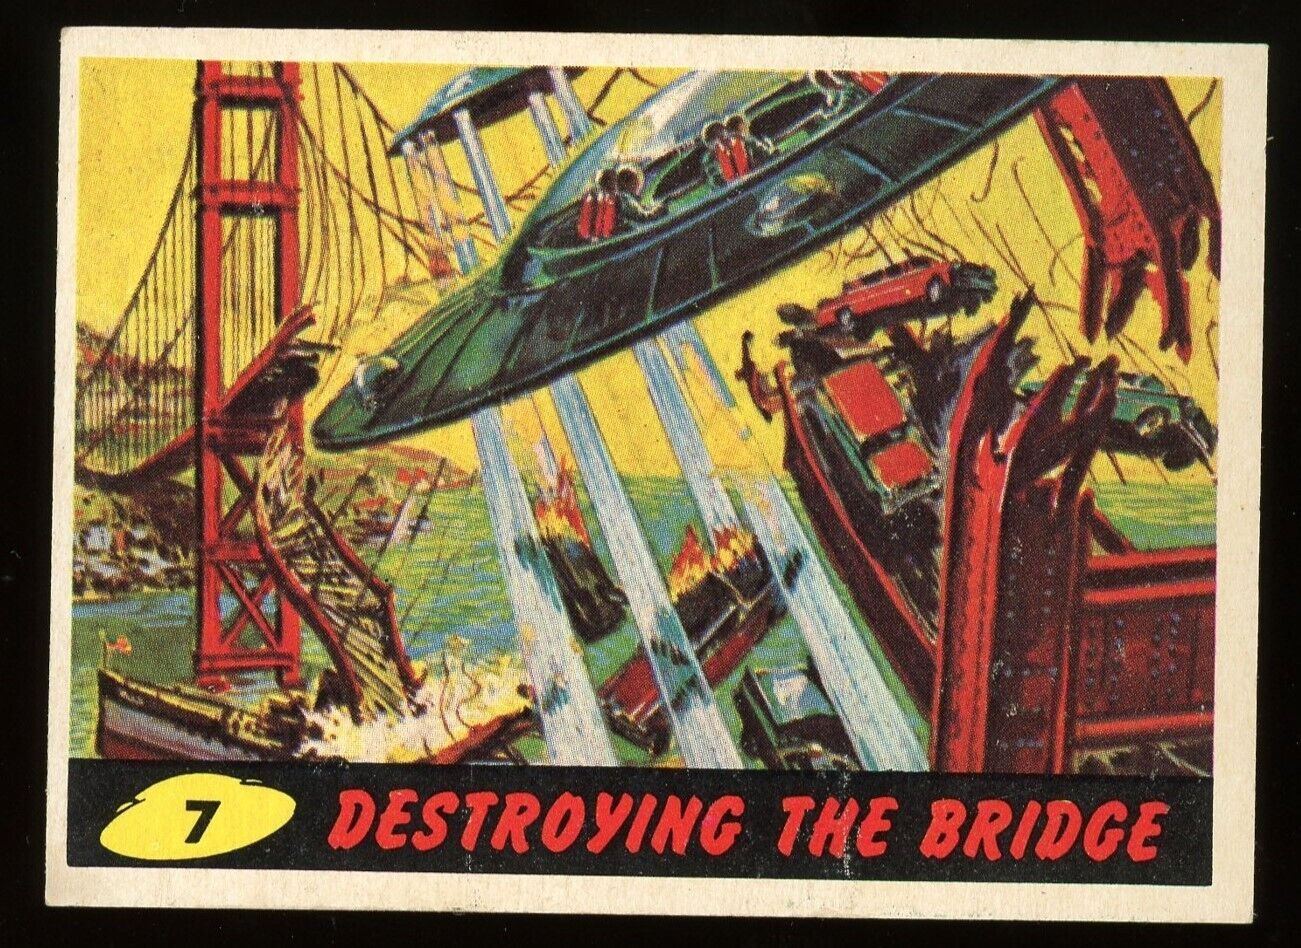 Original 1962 Topps Bubbles Mars Attacks Card # 7 Destroying The Bridge